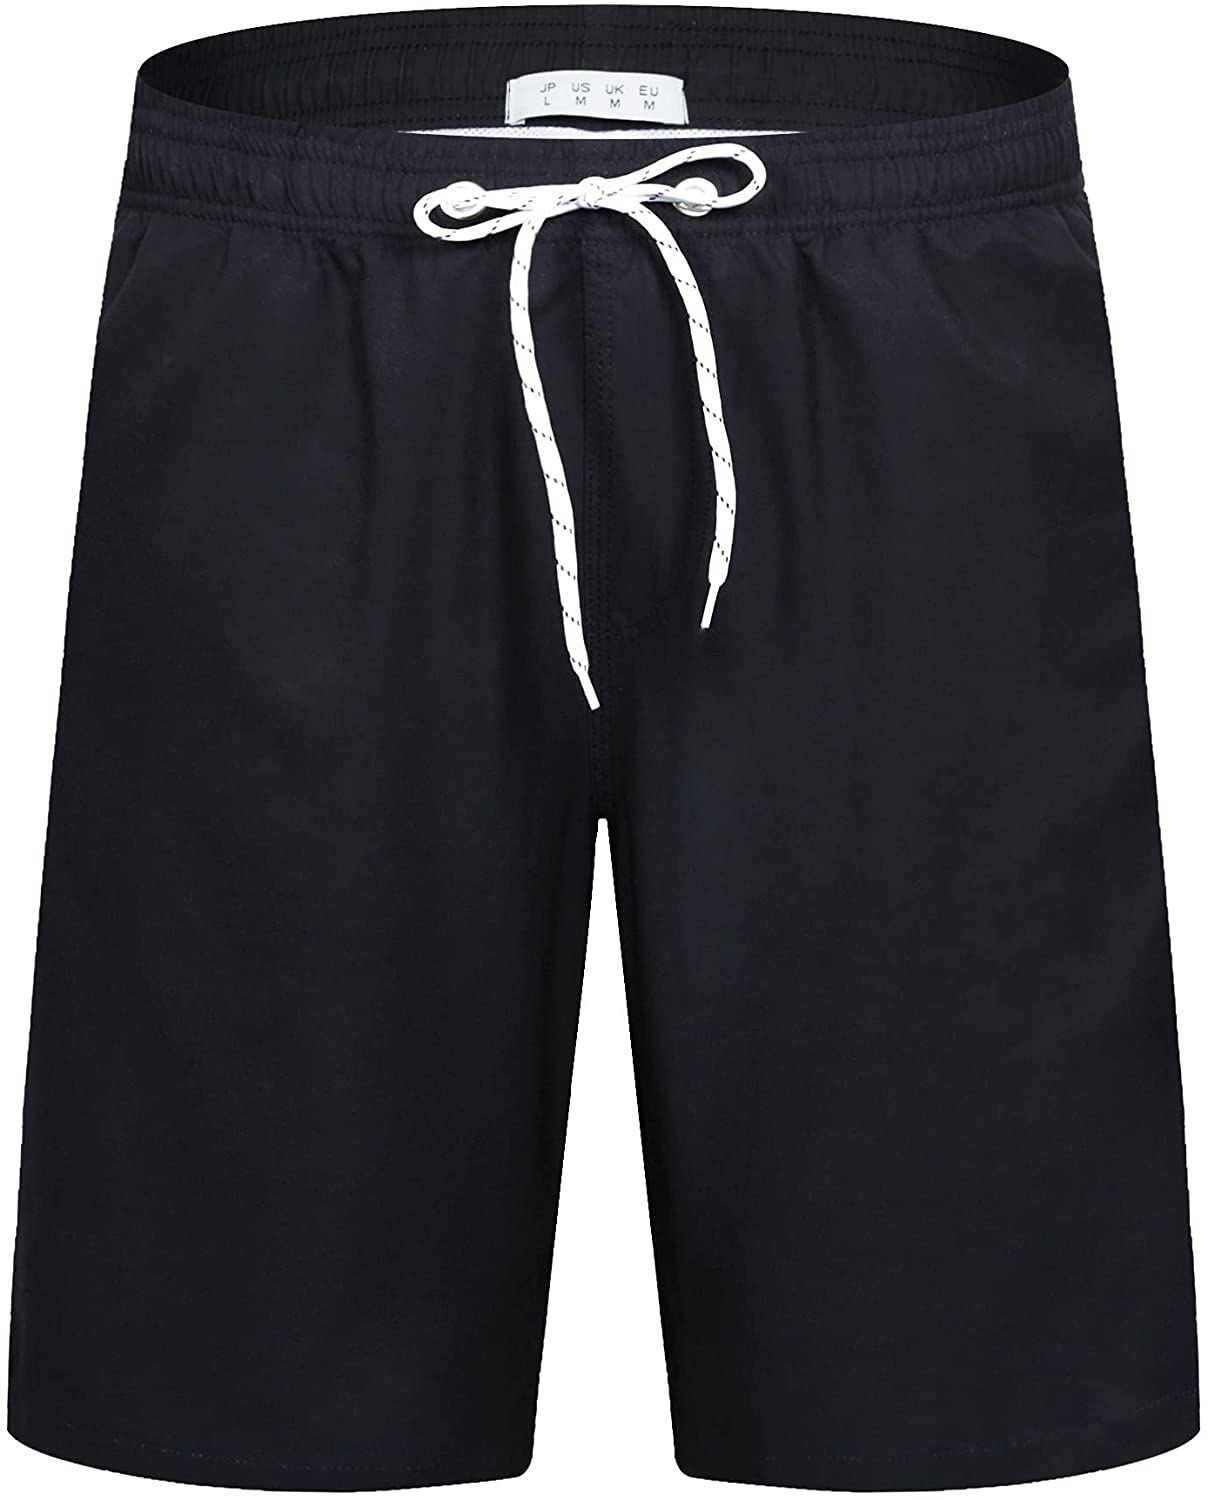 APTRO Men's Quick Dry Swim Trunks Swimwear Beach Board Shorts MP005 S :  : Clothing, Shoes & Accessories